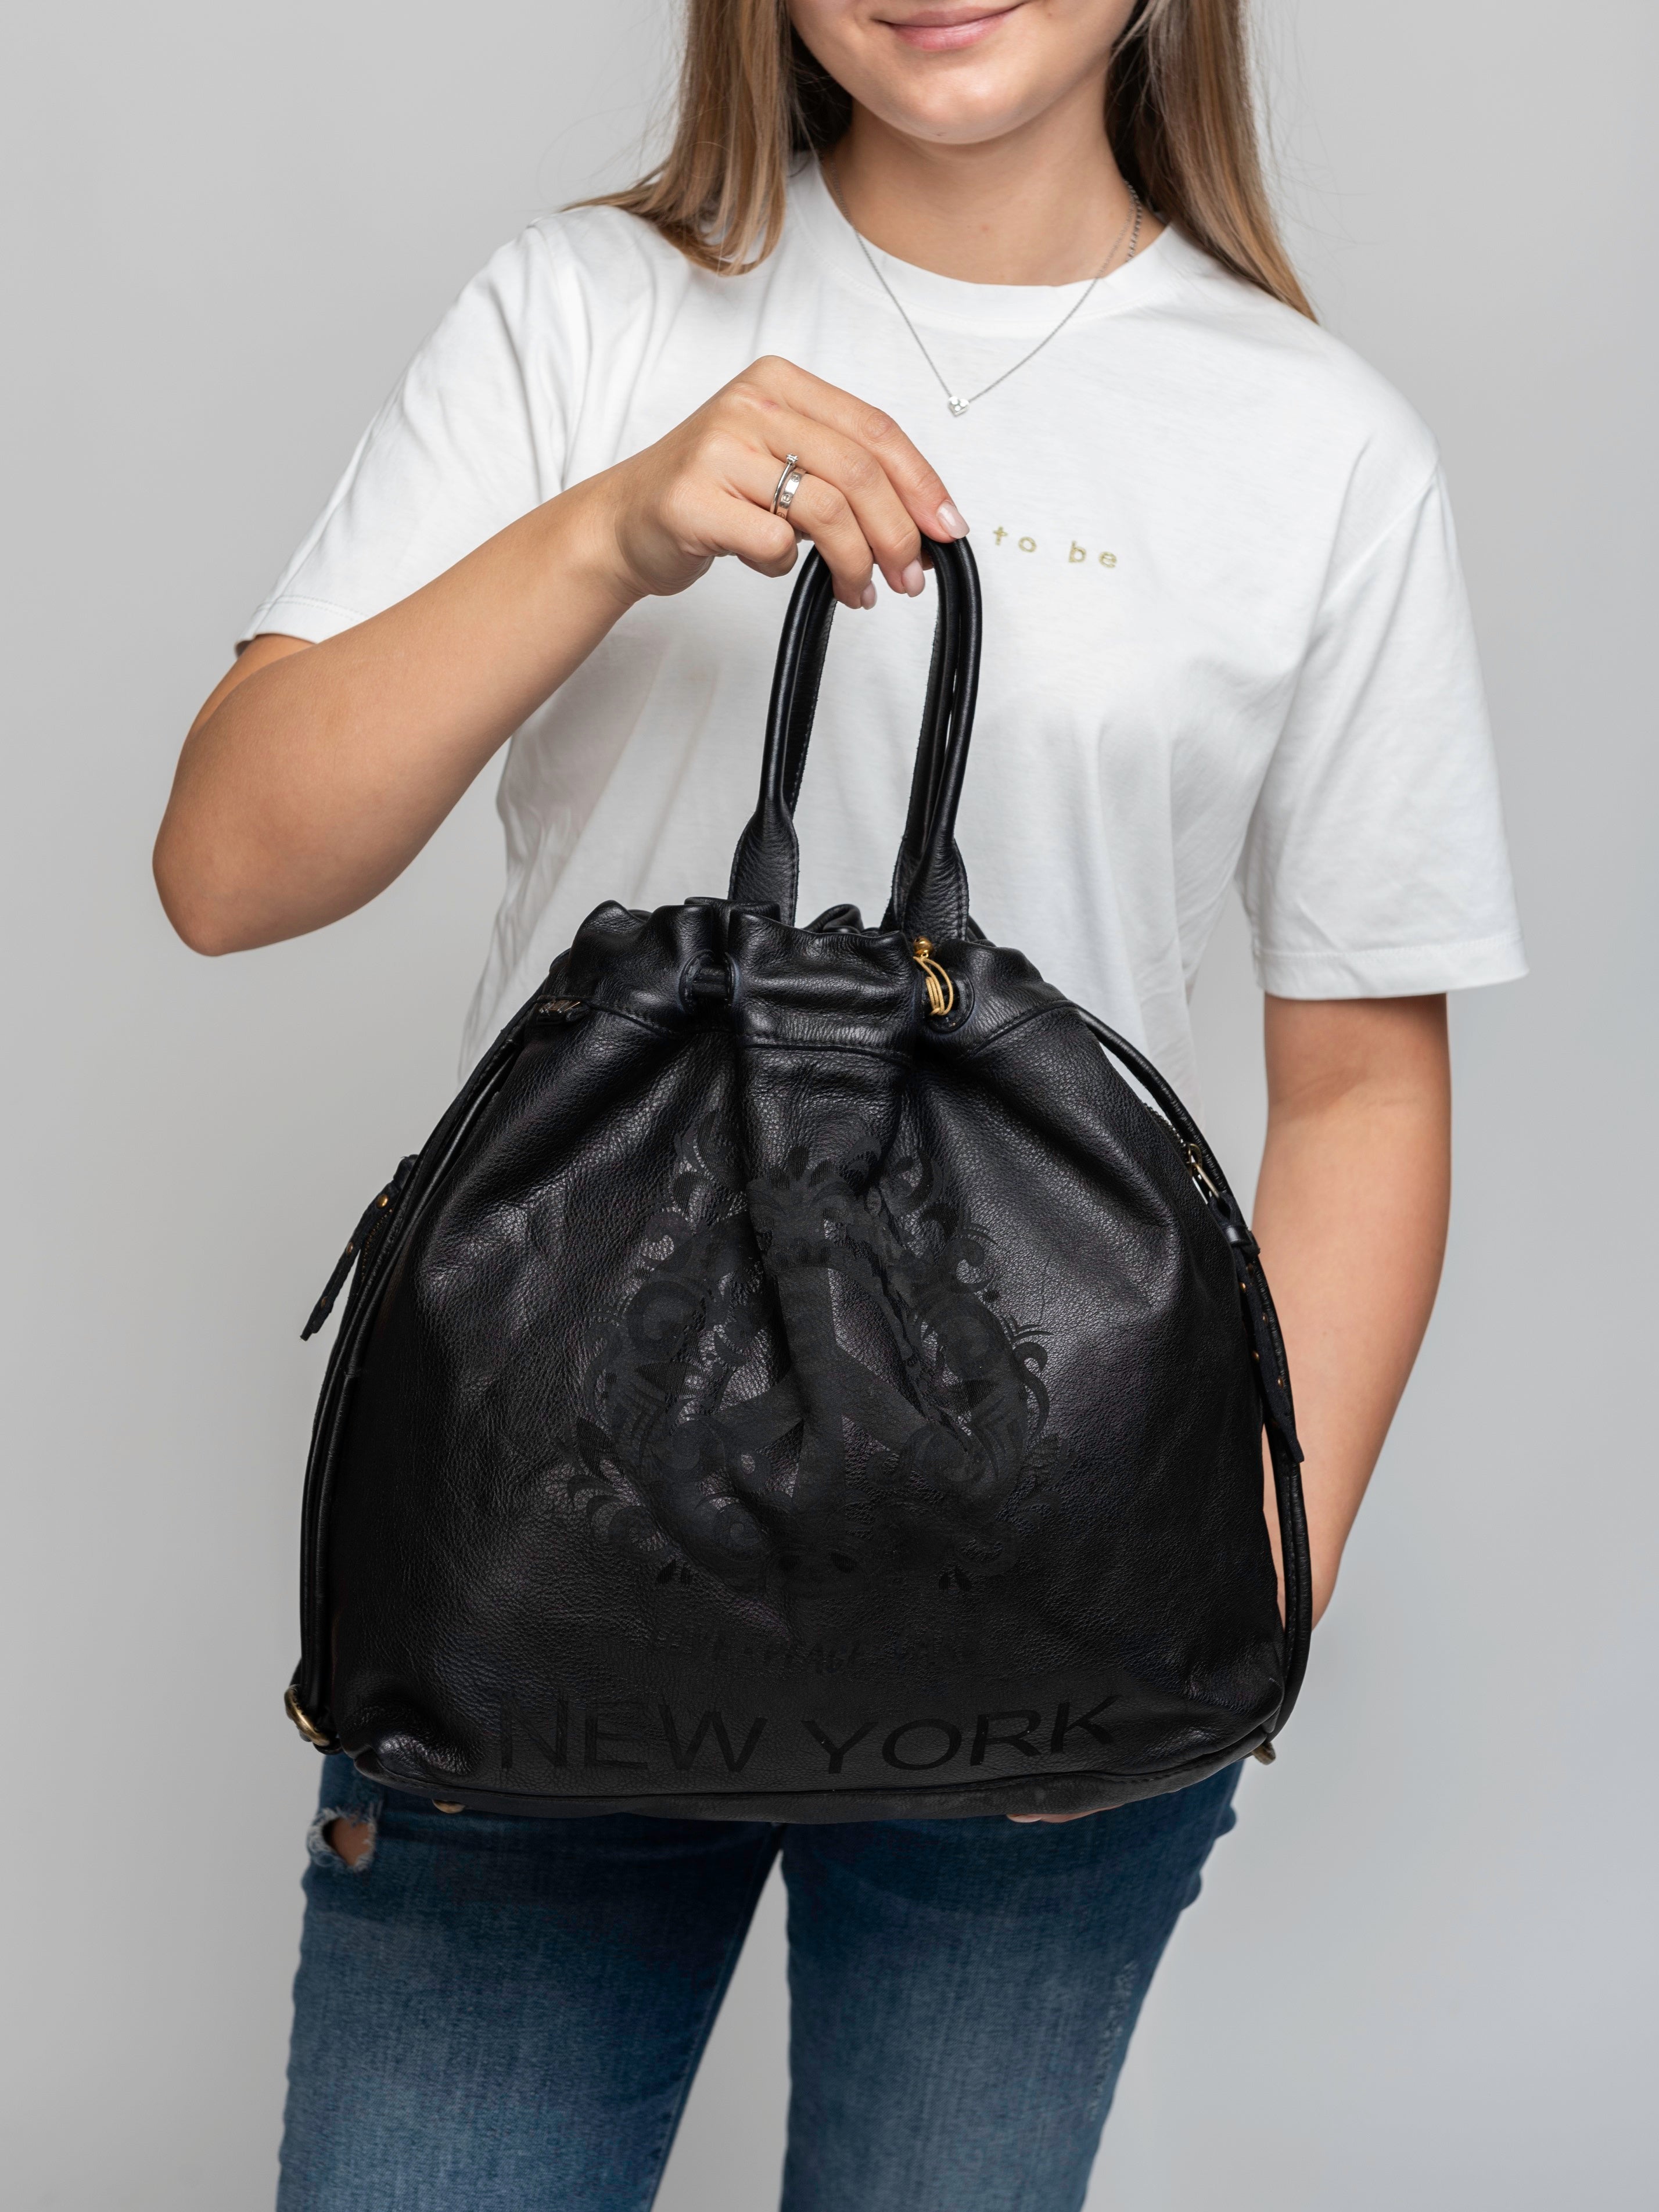 VITIS: Black leather backpack bag by Art N Vintage